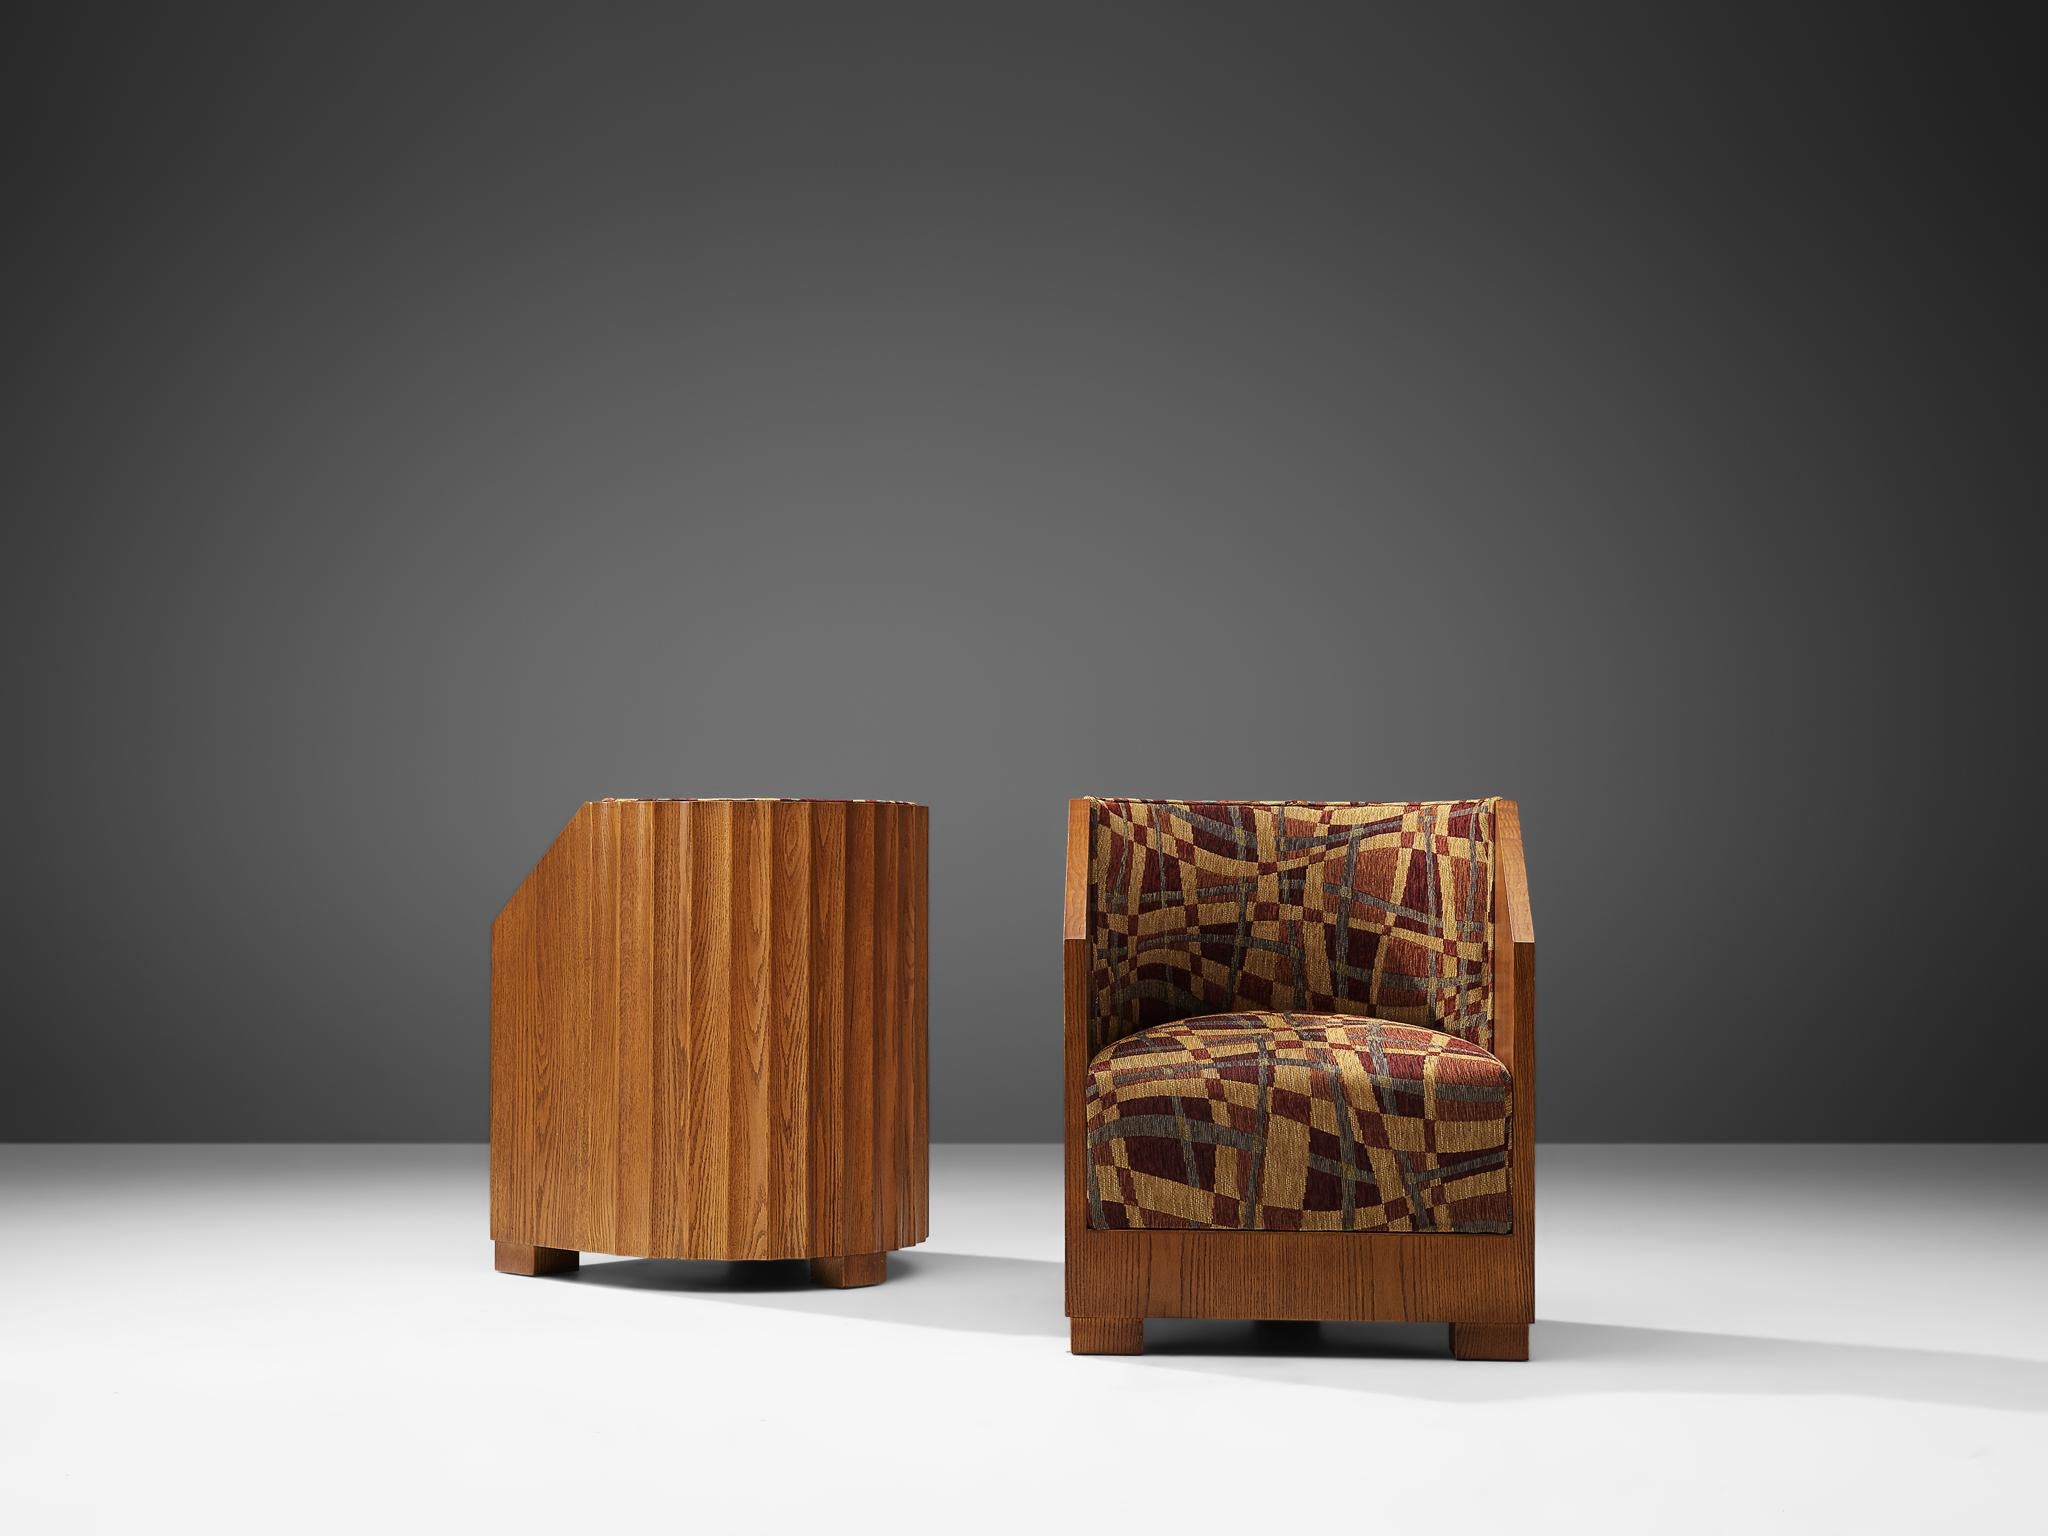 North American Pair of Art Deco Easy Chairs in Oak